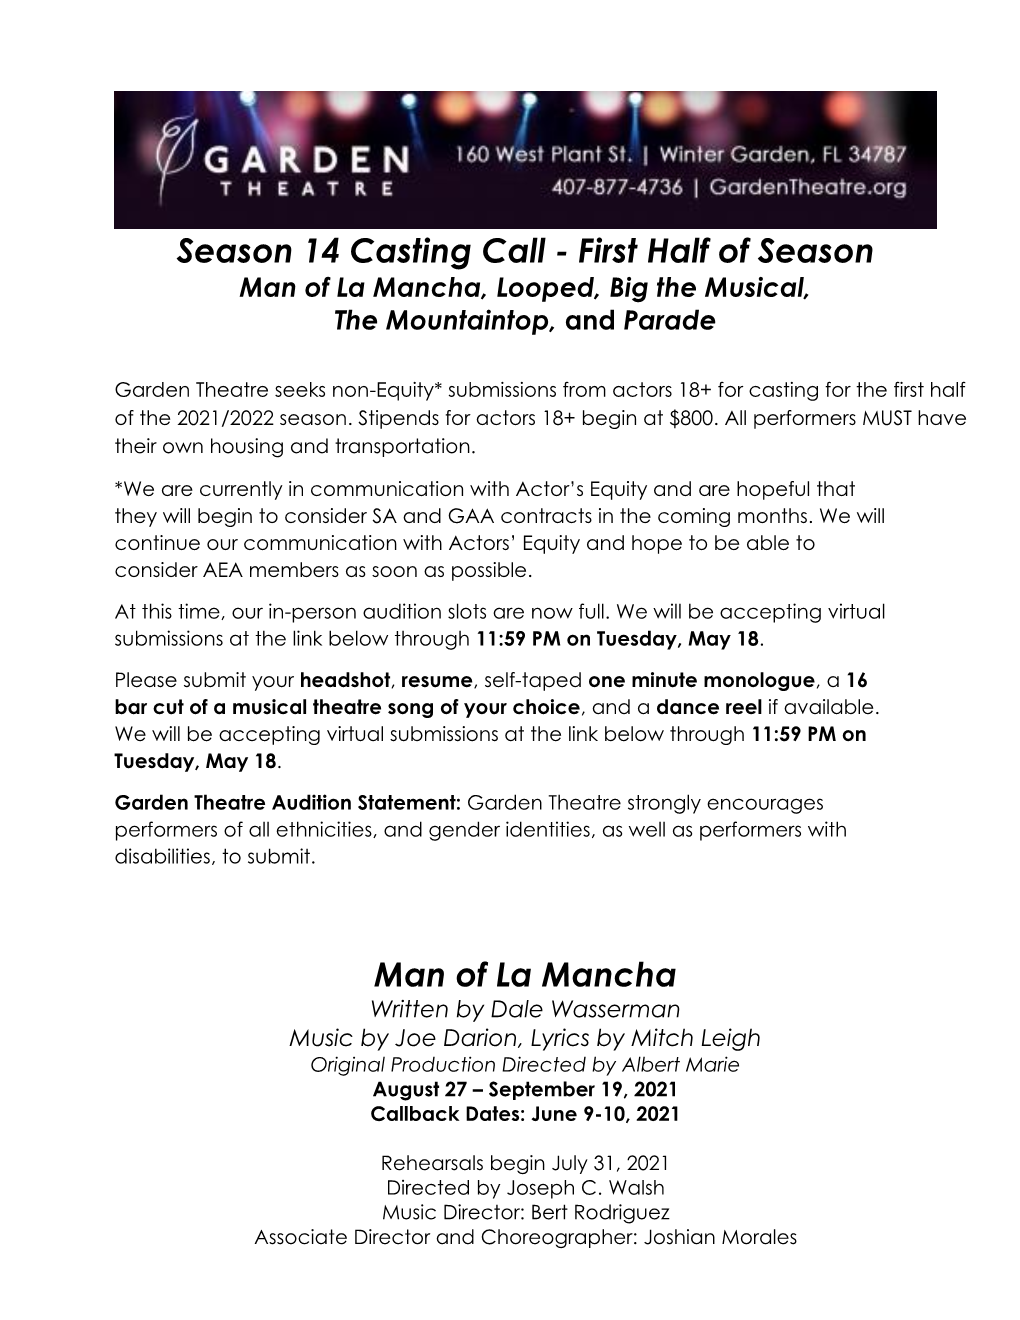 Season 14 Casting Call - First Half of Season Man of La Mancha, Looped, Big the Musical, the Mountaintop, and Parade